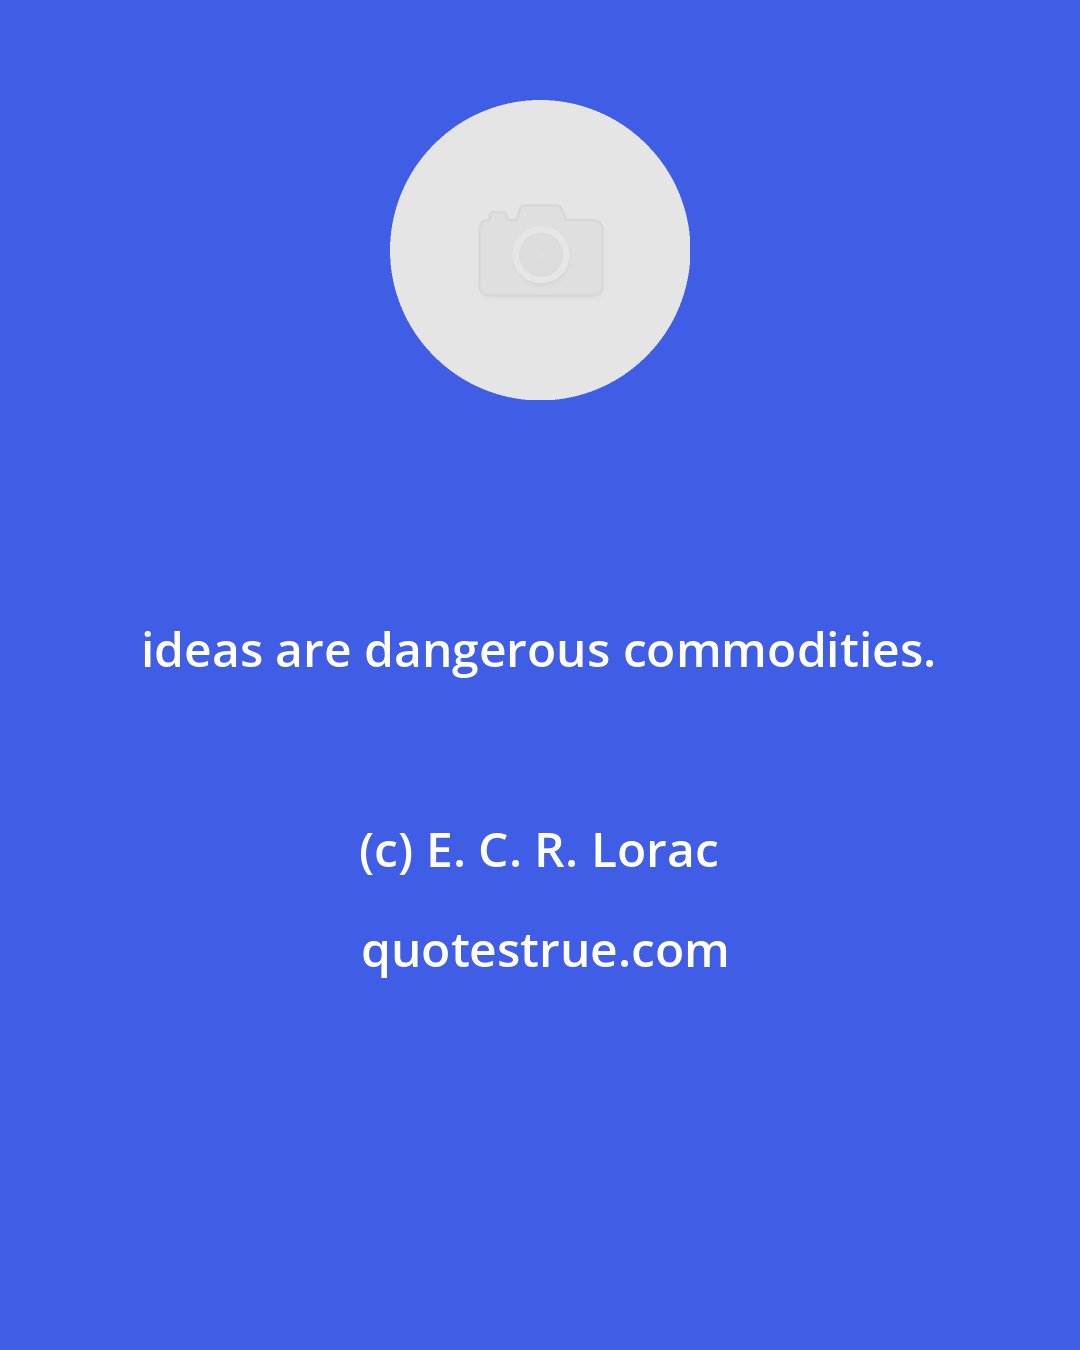 E. C. R. Lorac: ideas are dangerous commodities.